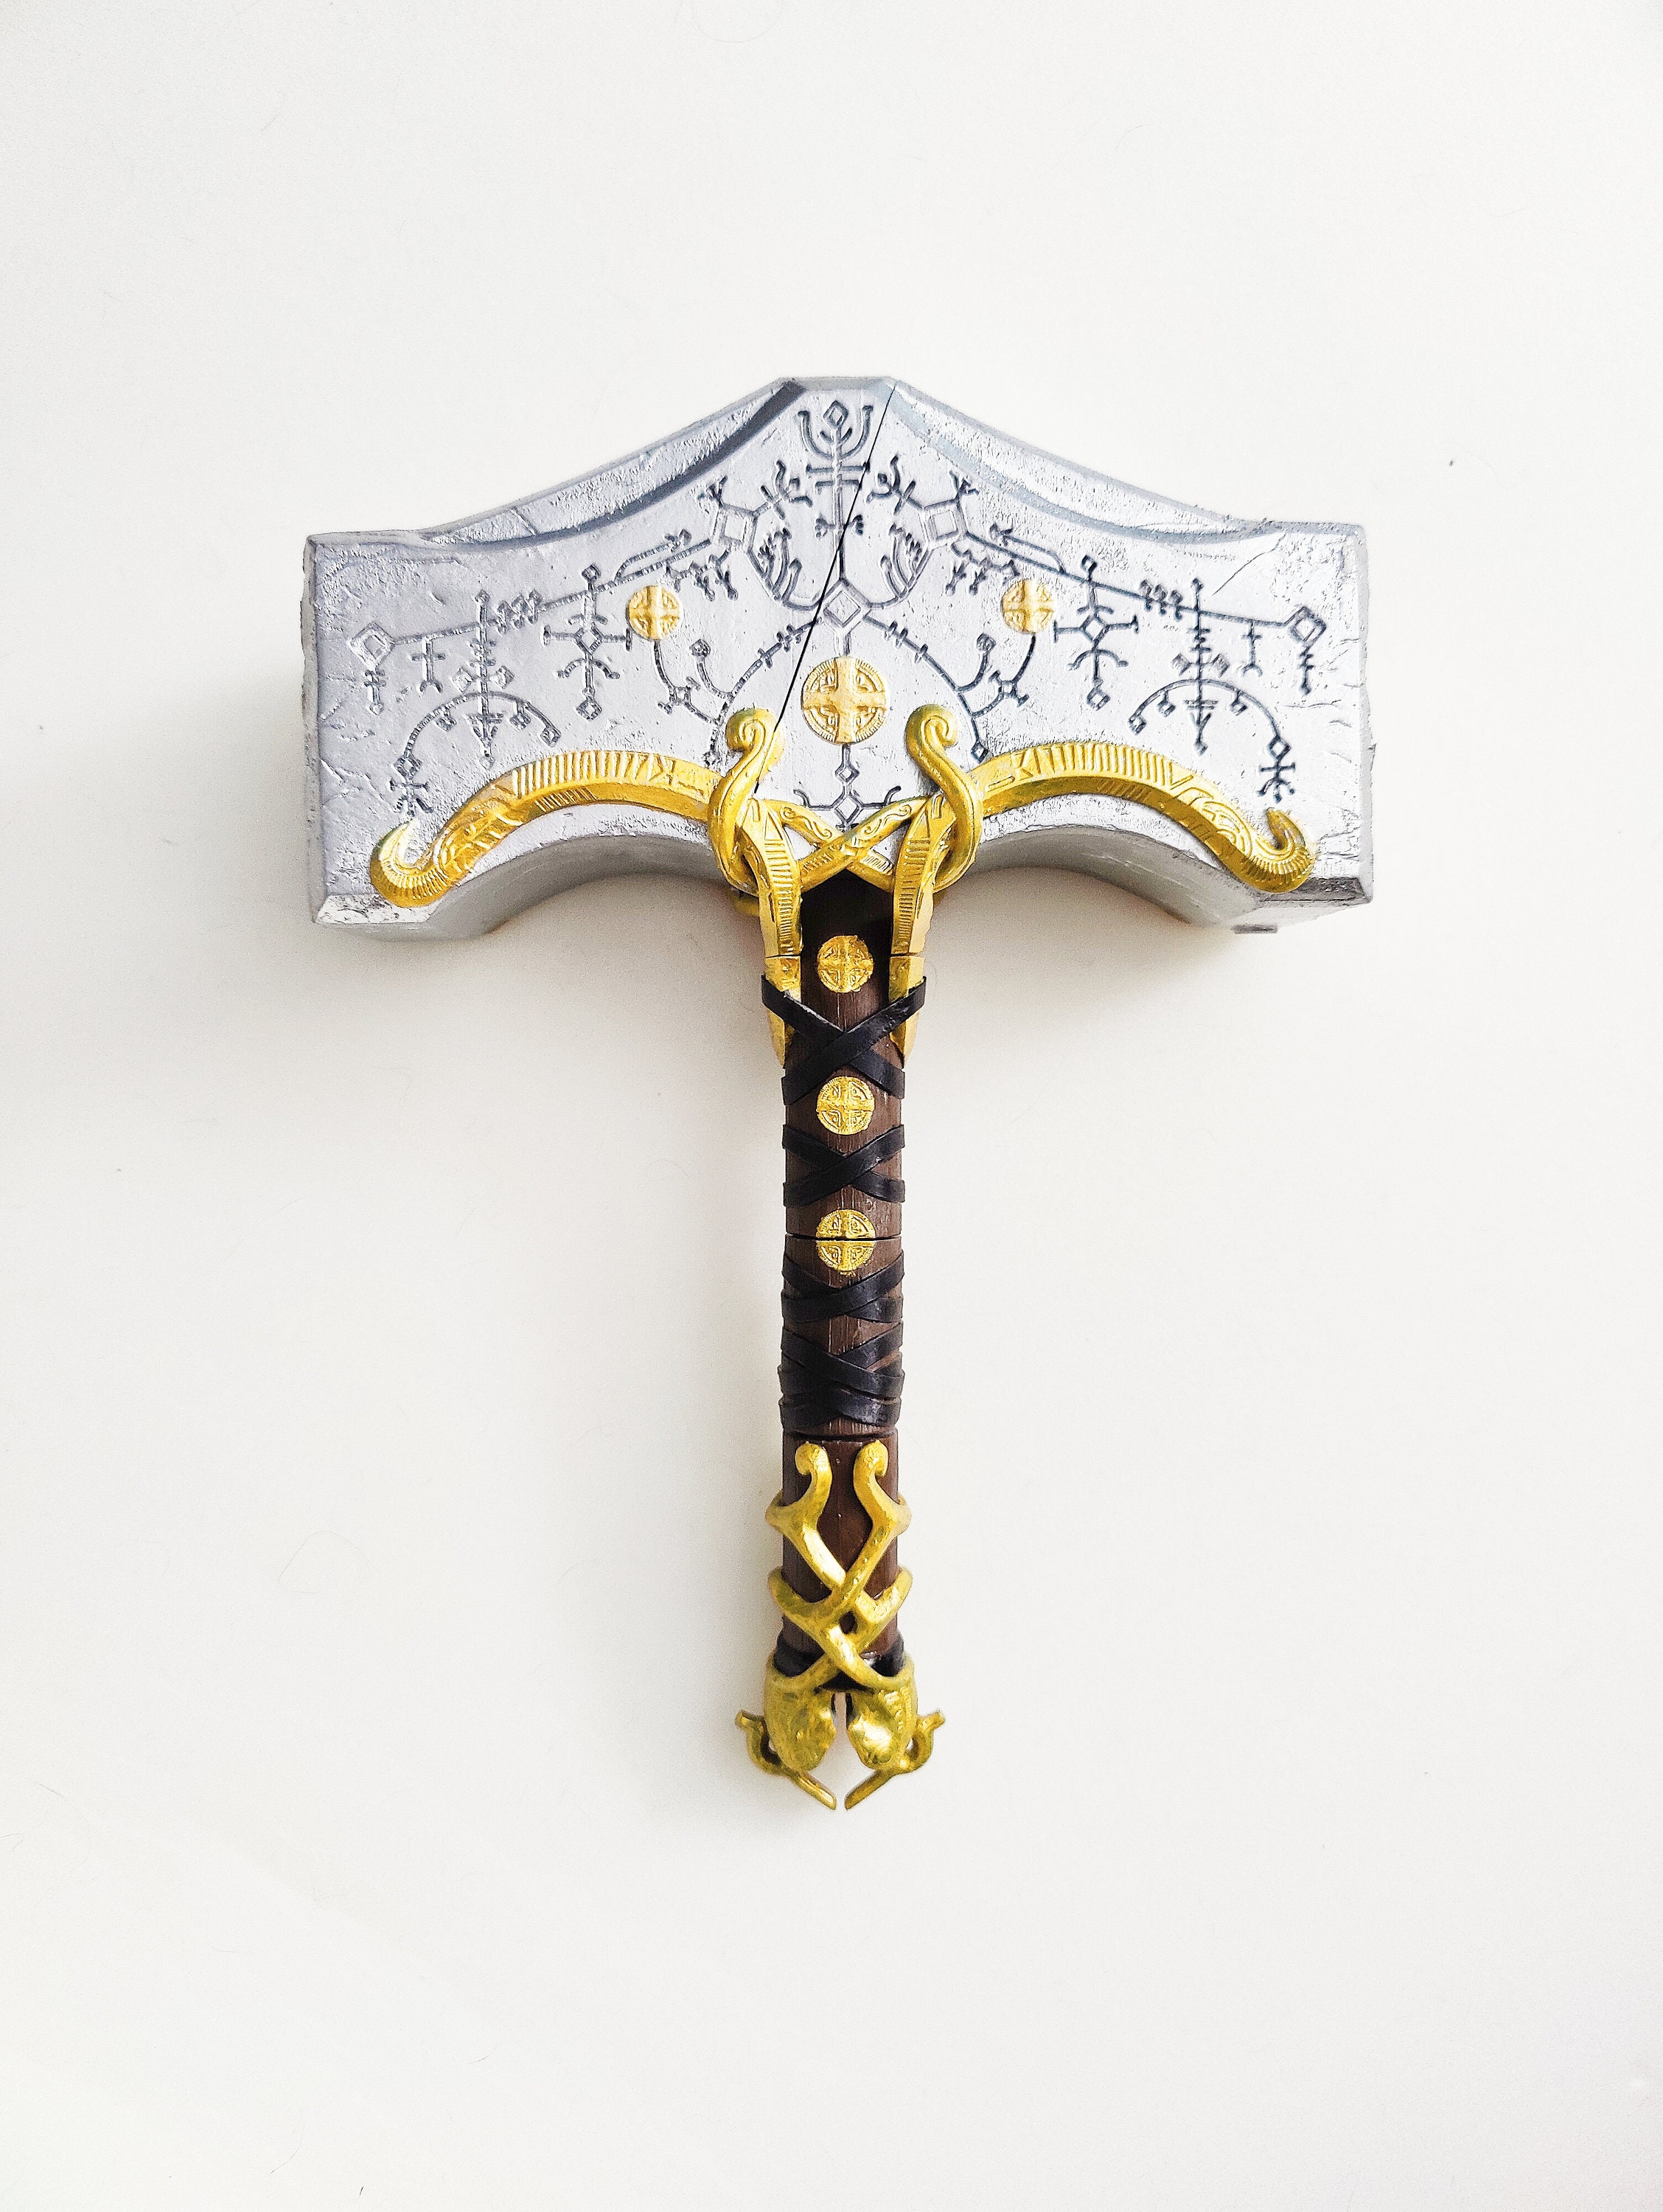 God of War: Mjölnir Thor's Hammer by Micro Center